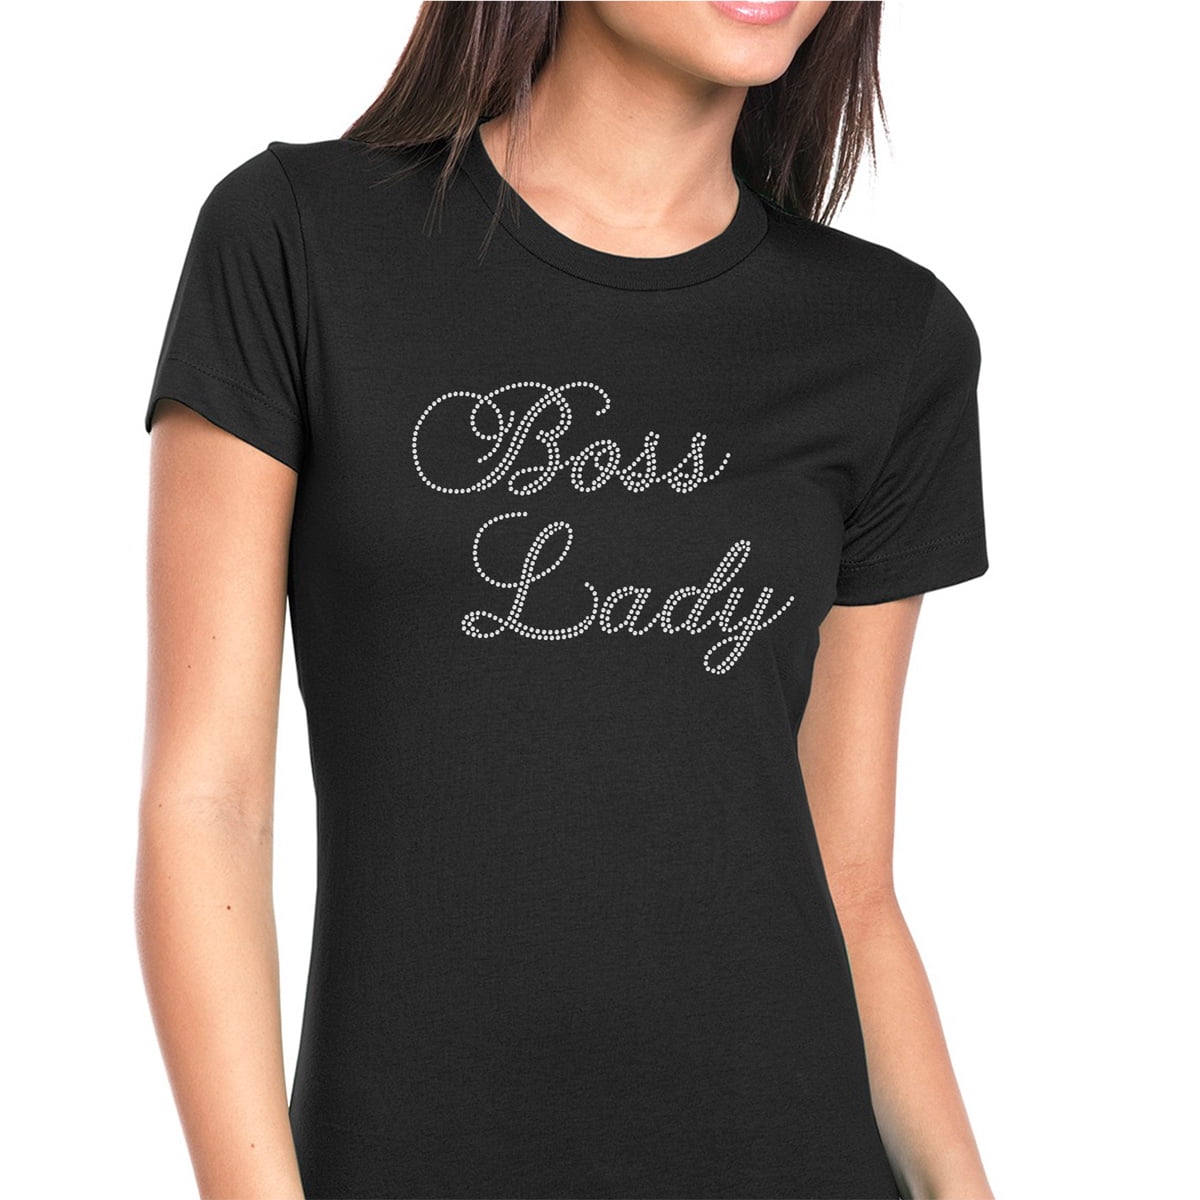 Rhinestone Wear - Womens T-Shirt Rhinestone Bling Black Tee Boss Lady ...